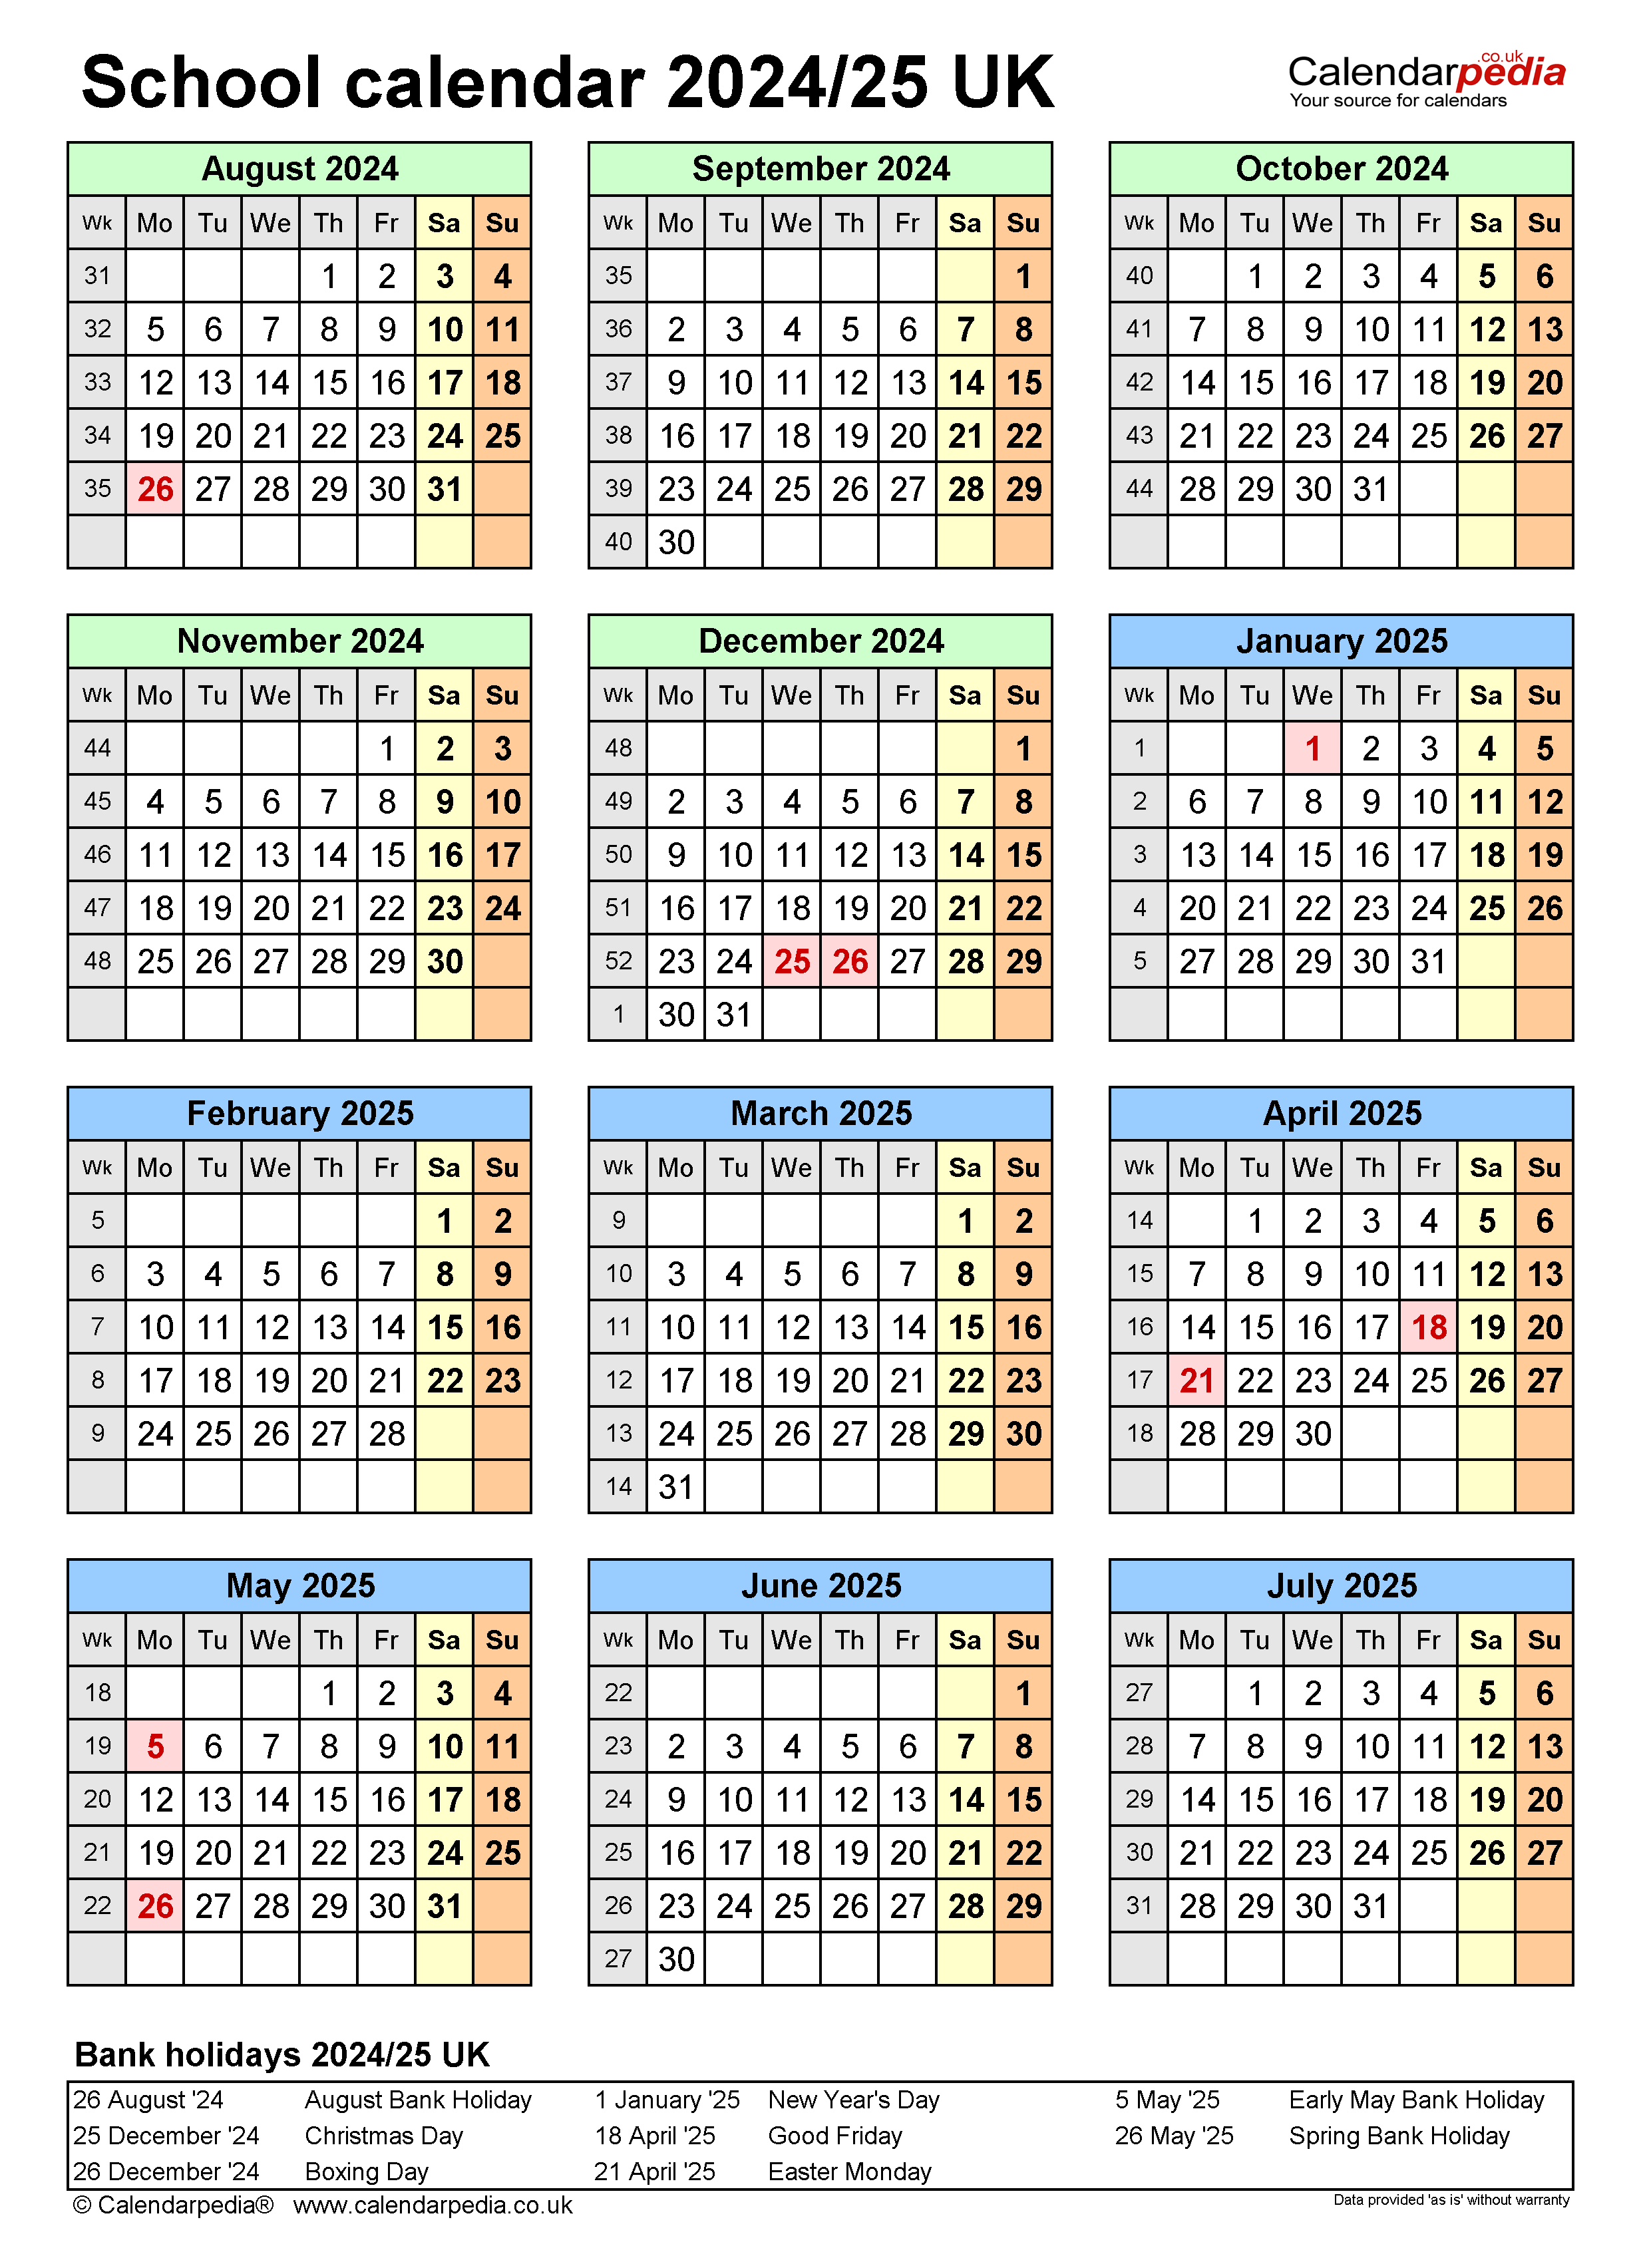 Hisd 2024 Calendar